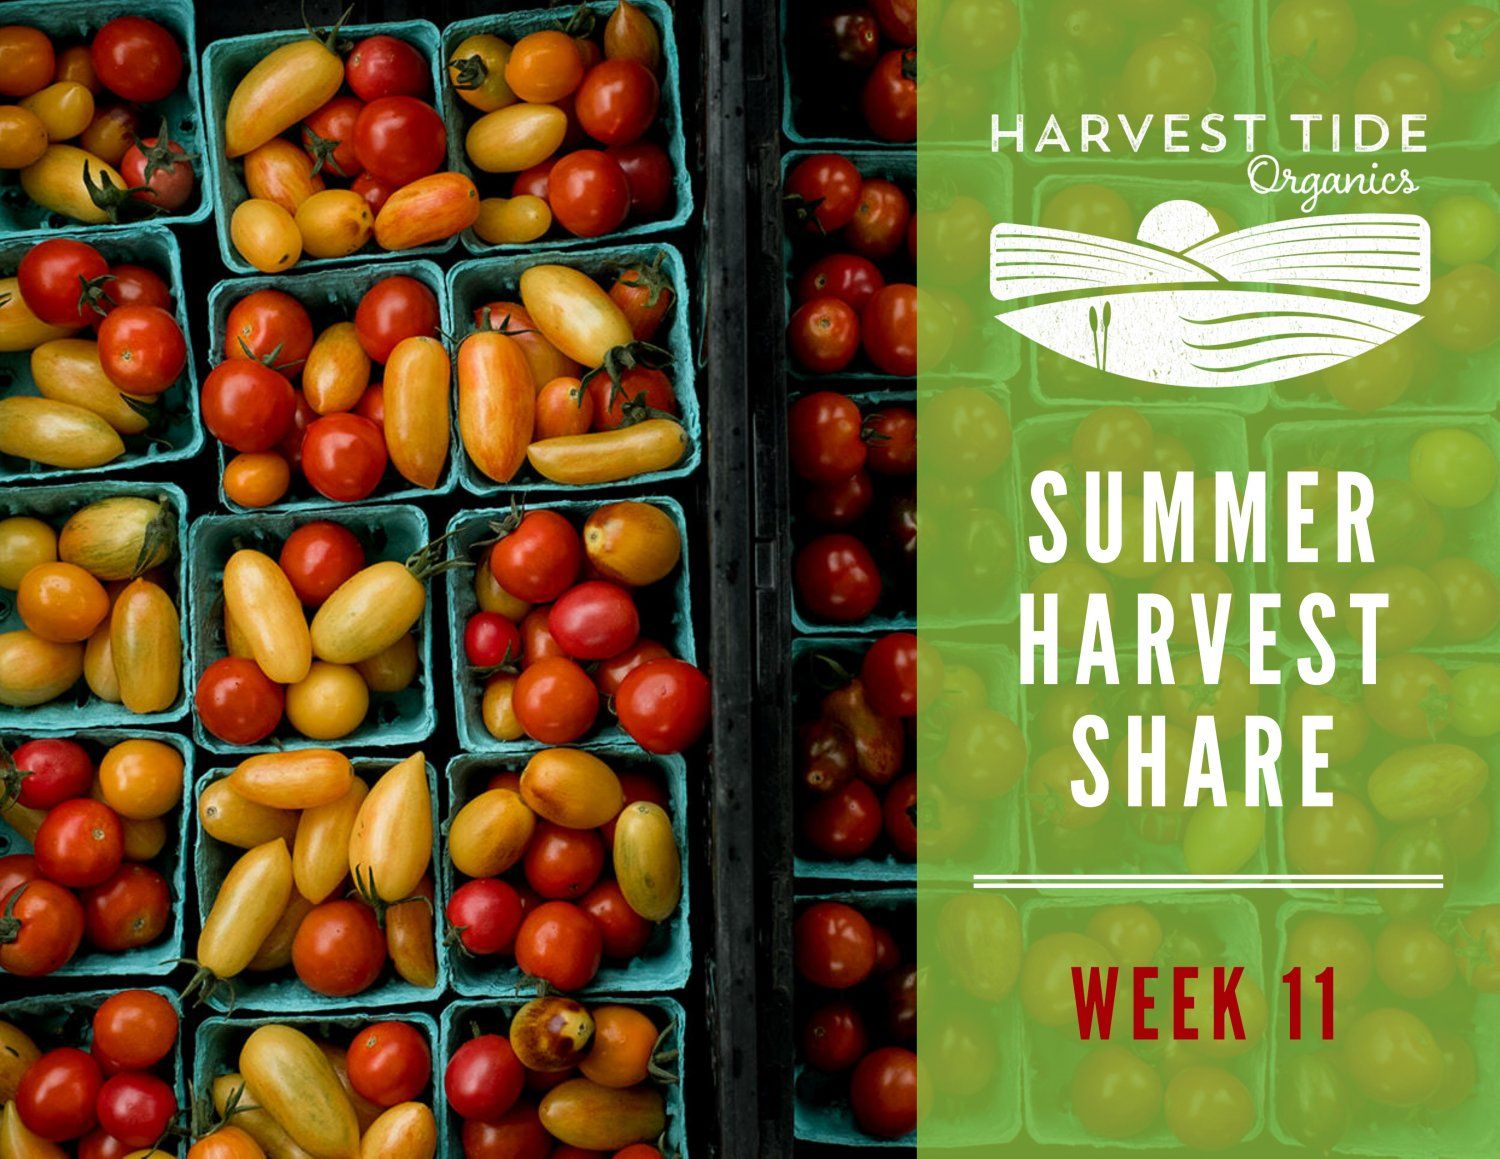 Next Happening: Week 11 - Summer Harvest Share